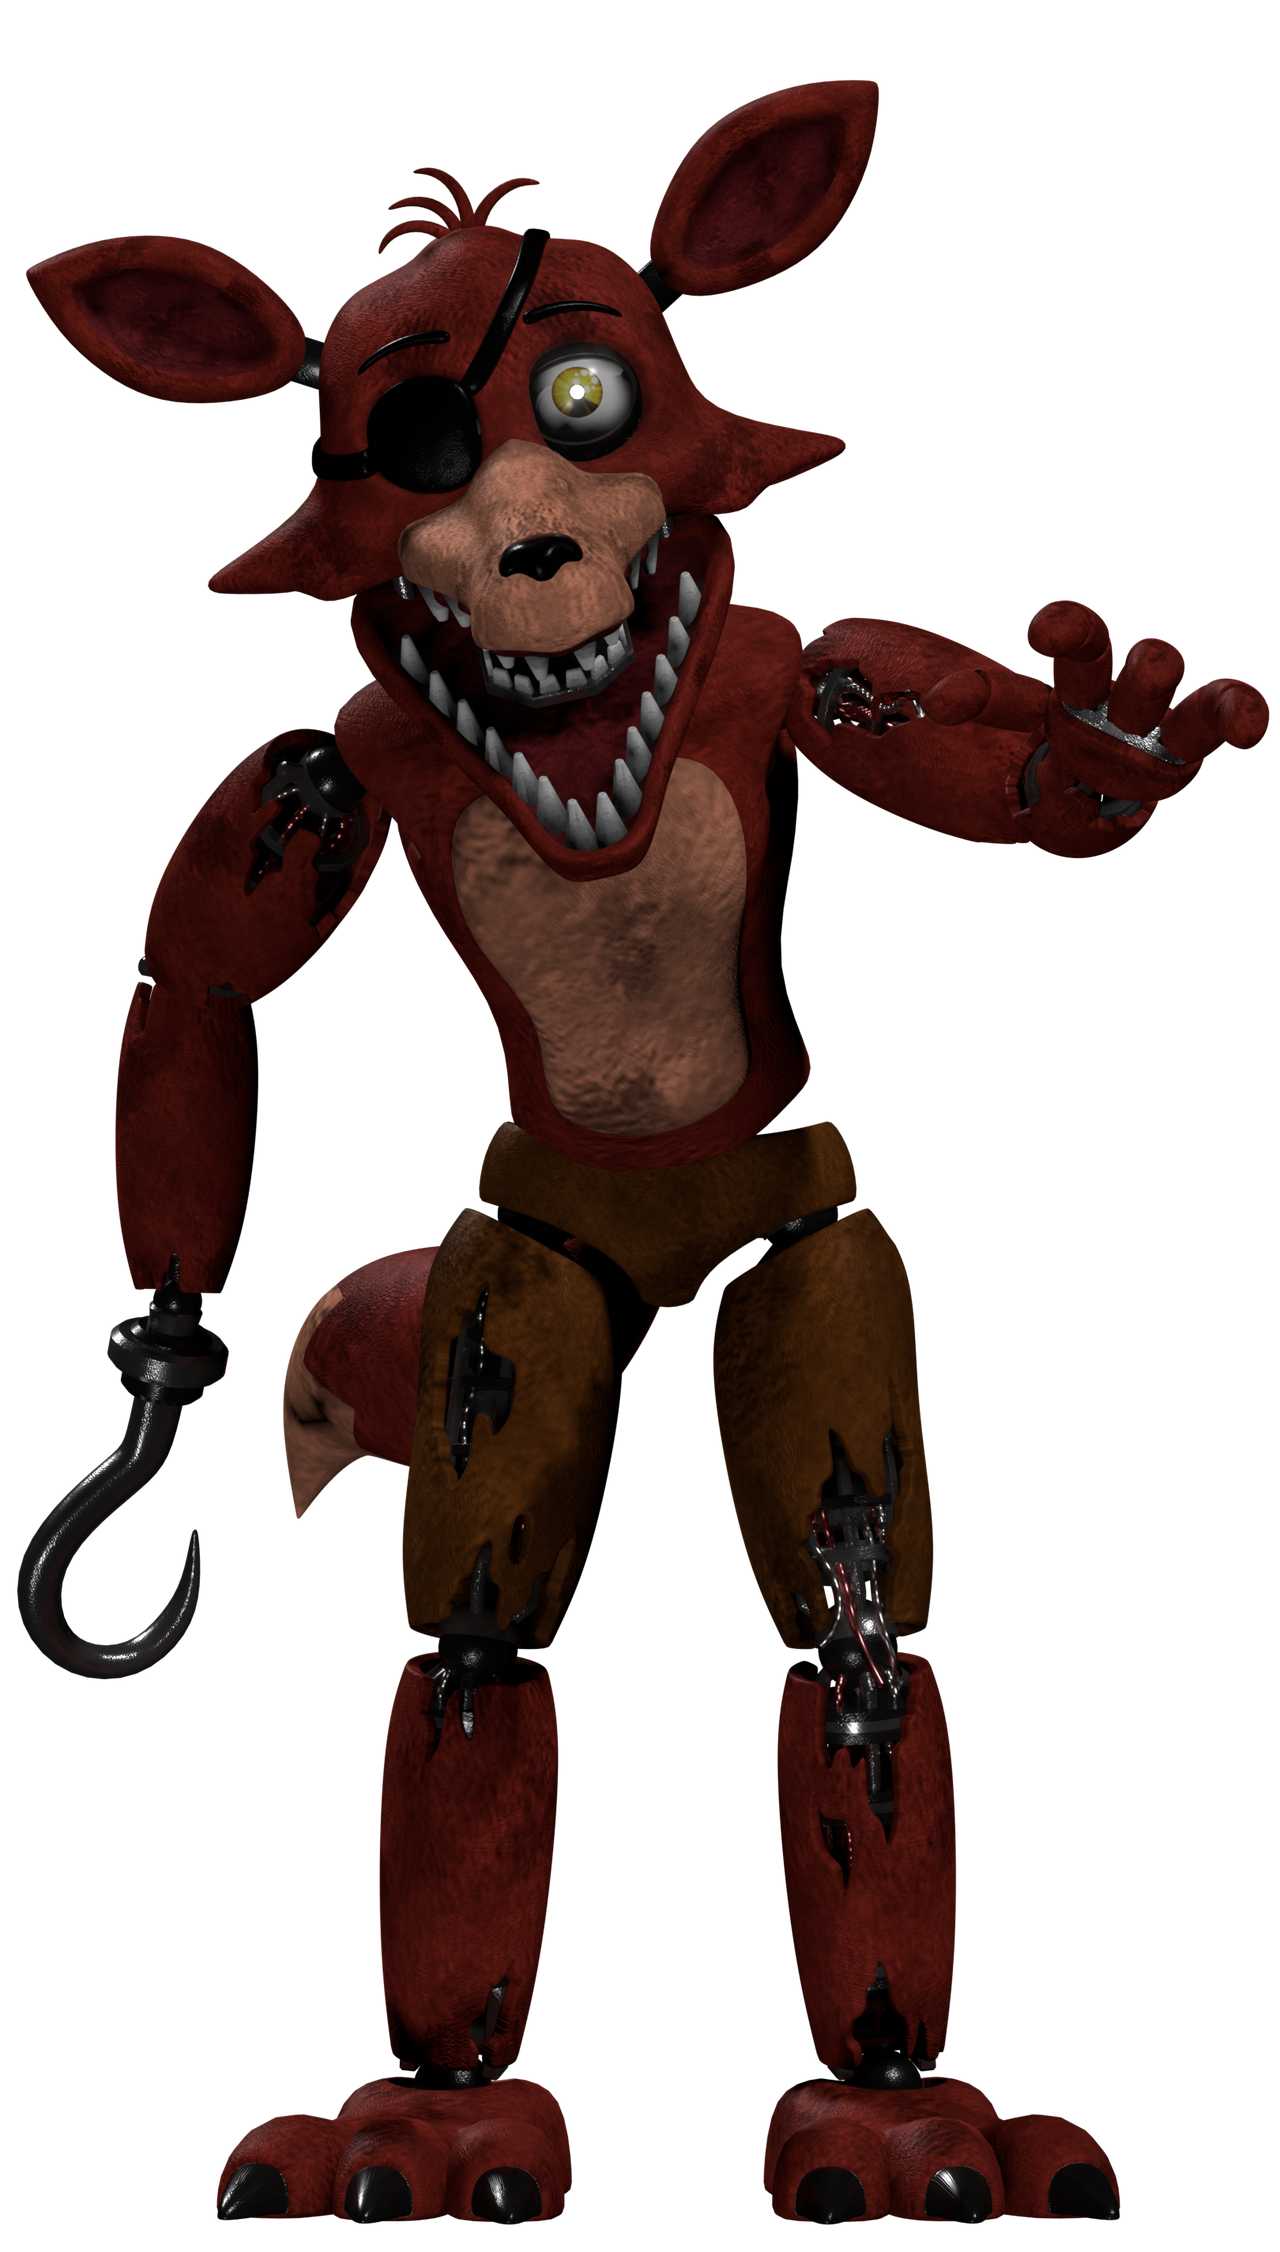 Withered Foxy by Freddydoom5 on DeviantArt